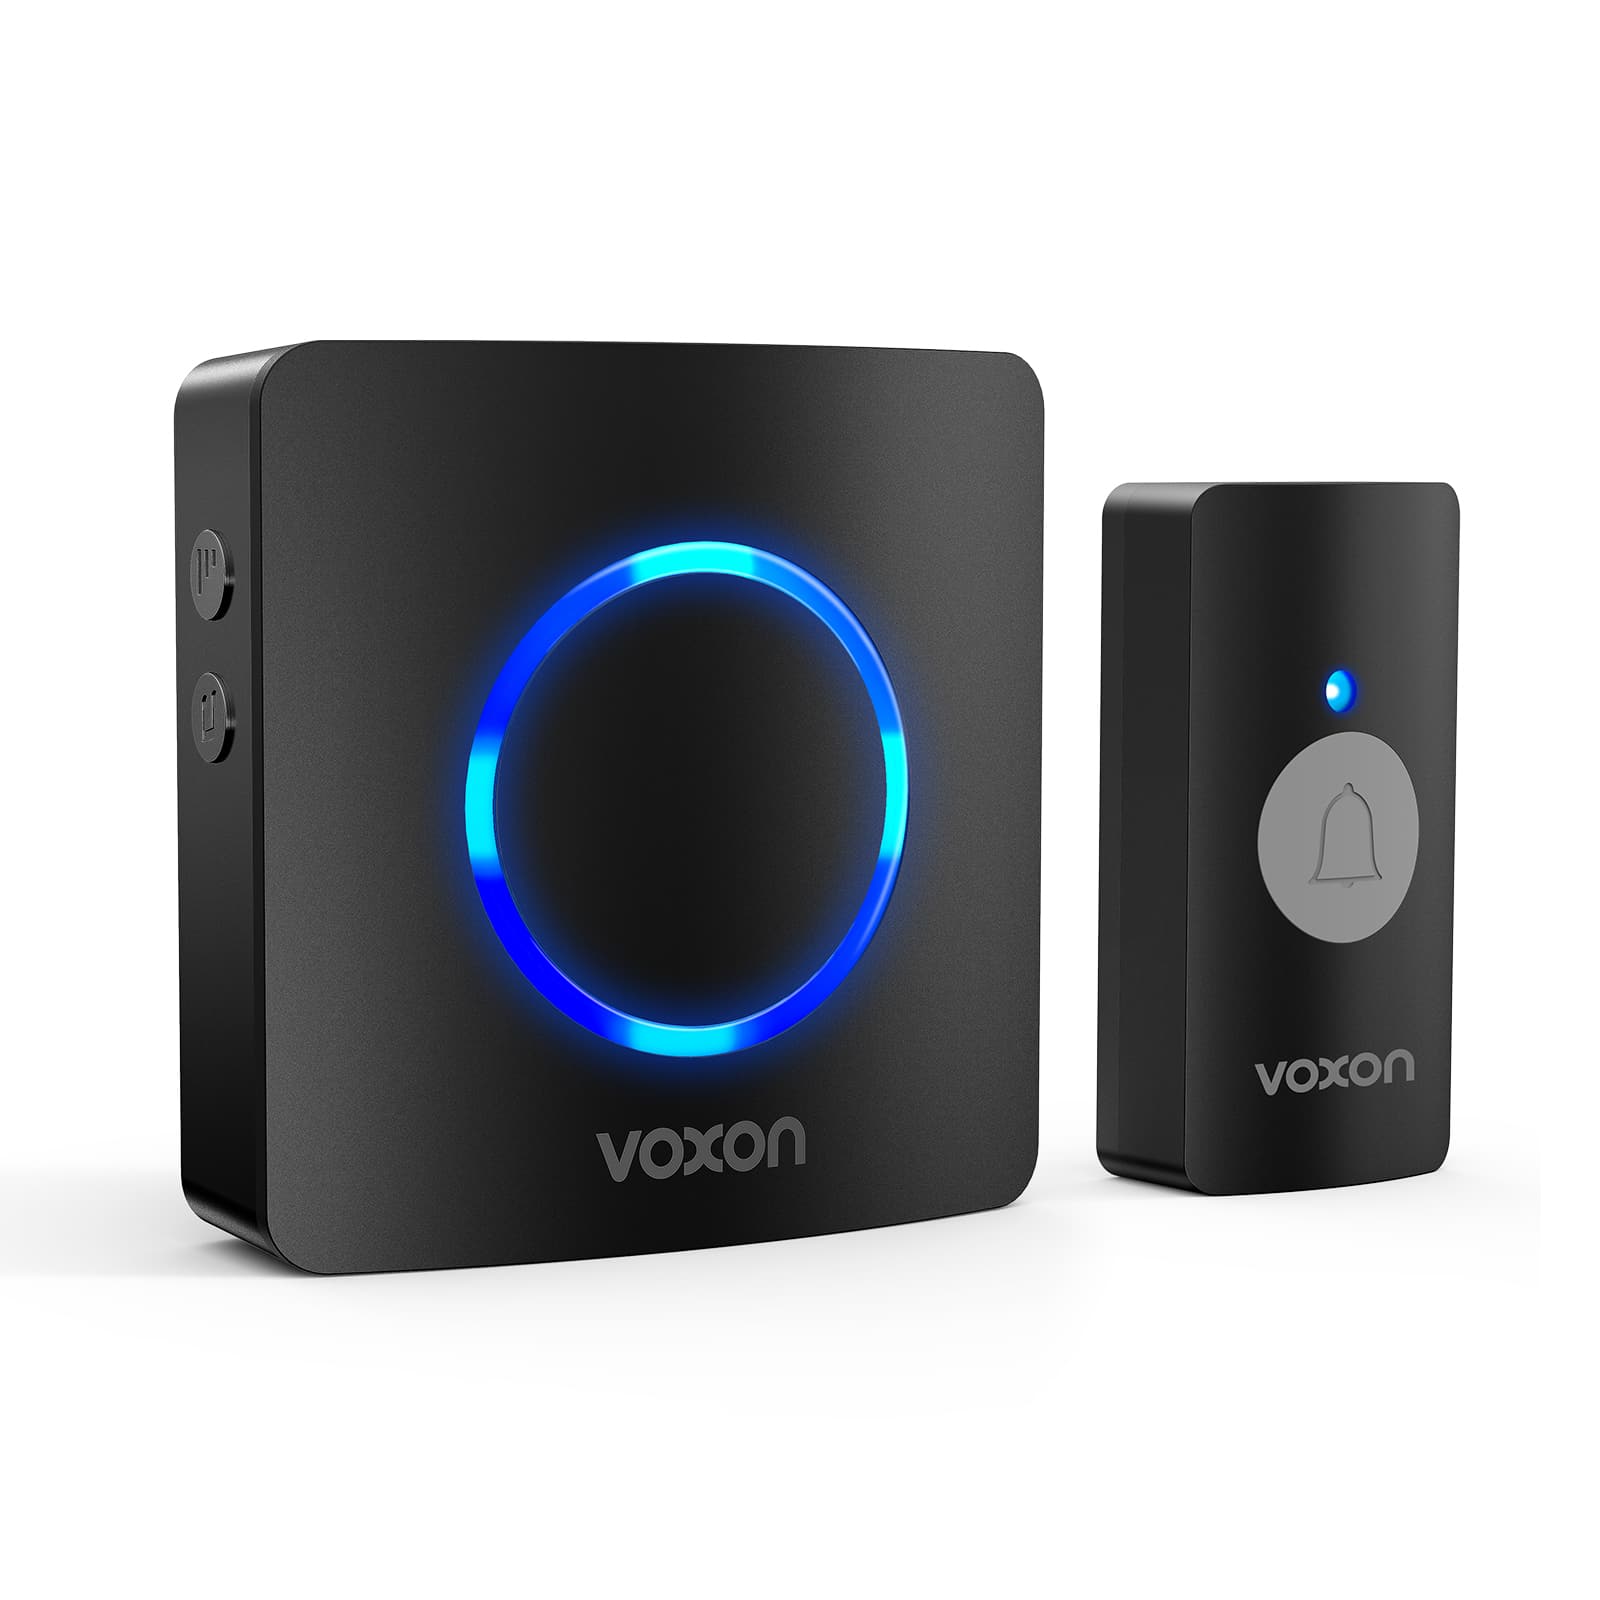 Voxon' ordinateur portable Voxon